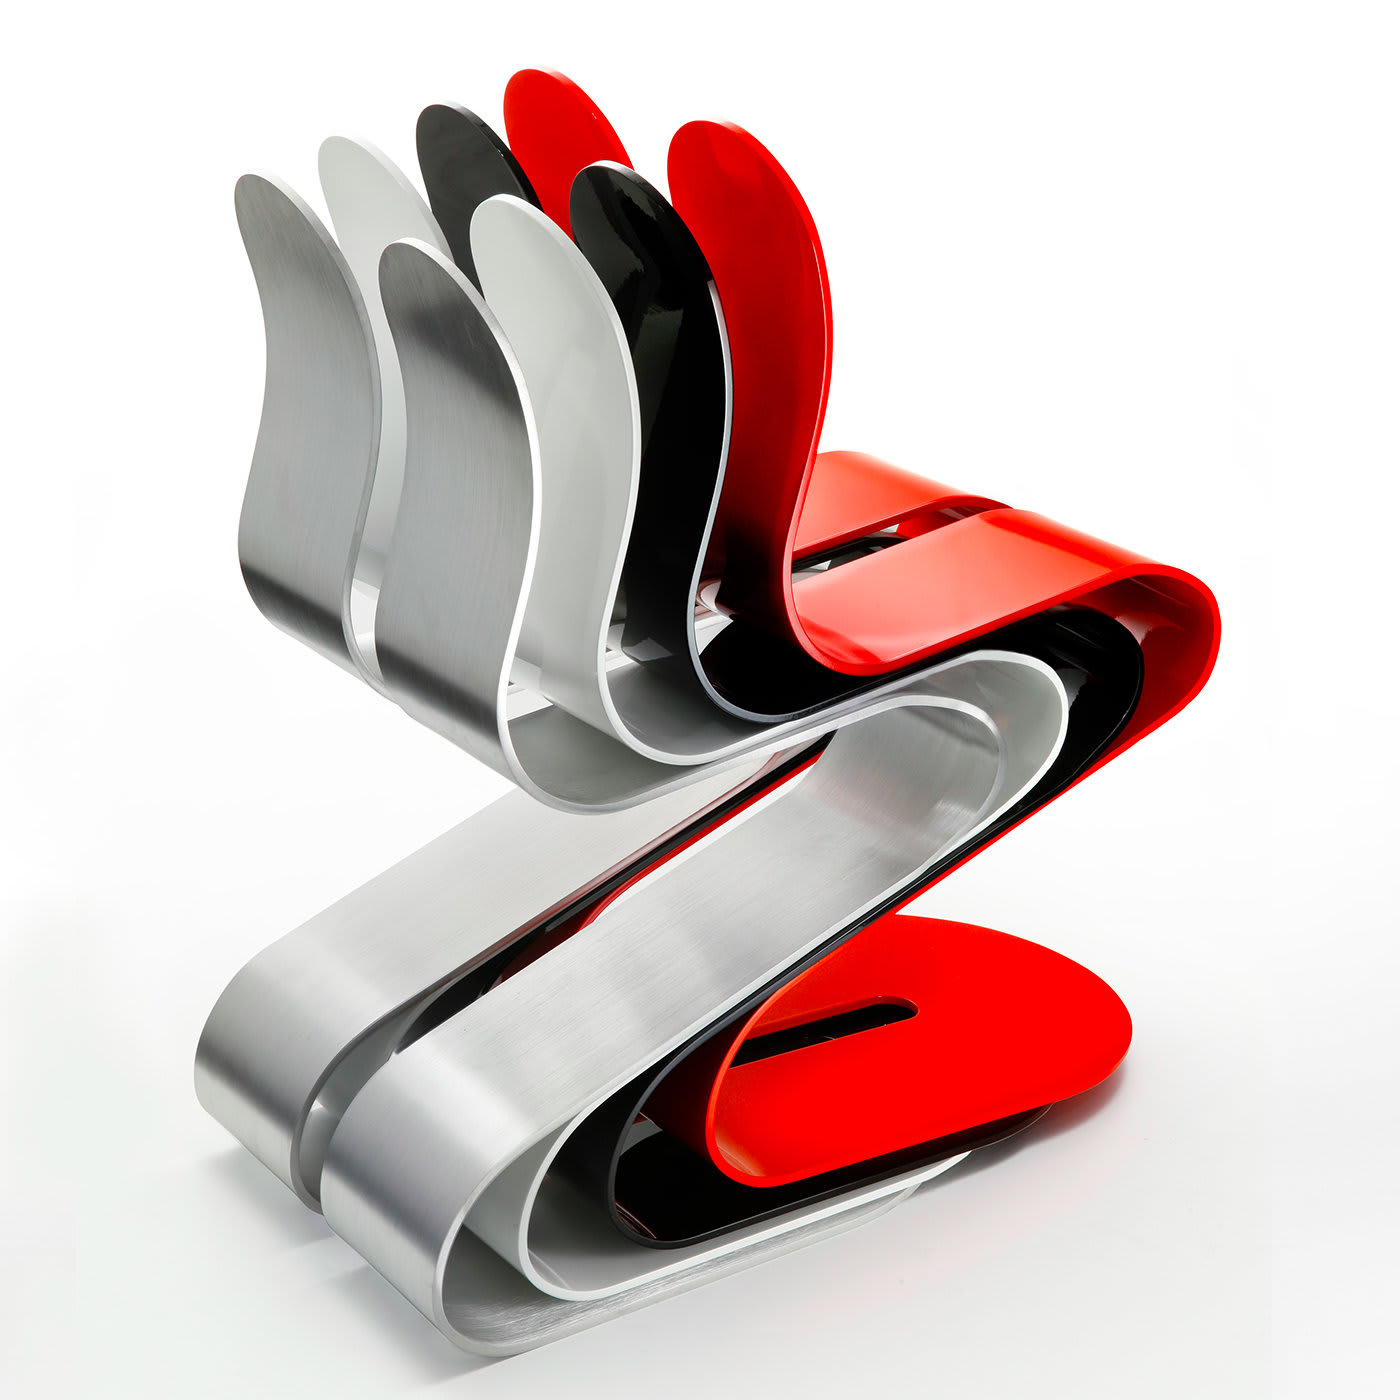 Fluid Ribbon Red Chair by Michael D'Amato - Lamberti Design